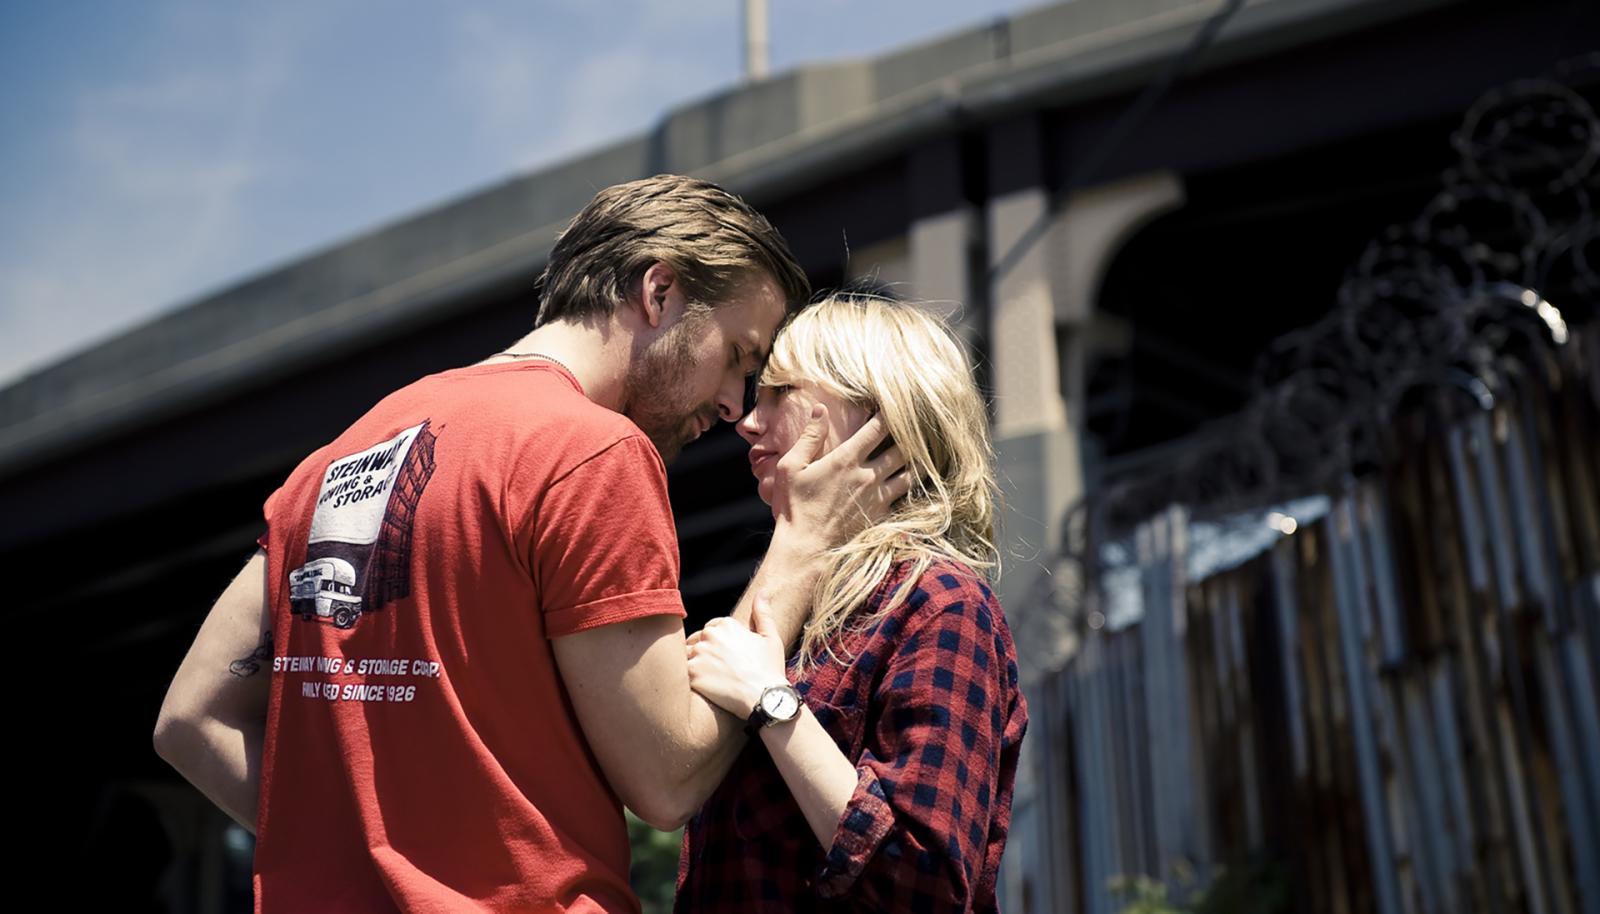 10 Romance Films with Heartbreaking Endings Prove Love Doesn't Always Win - image 1